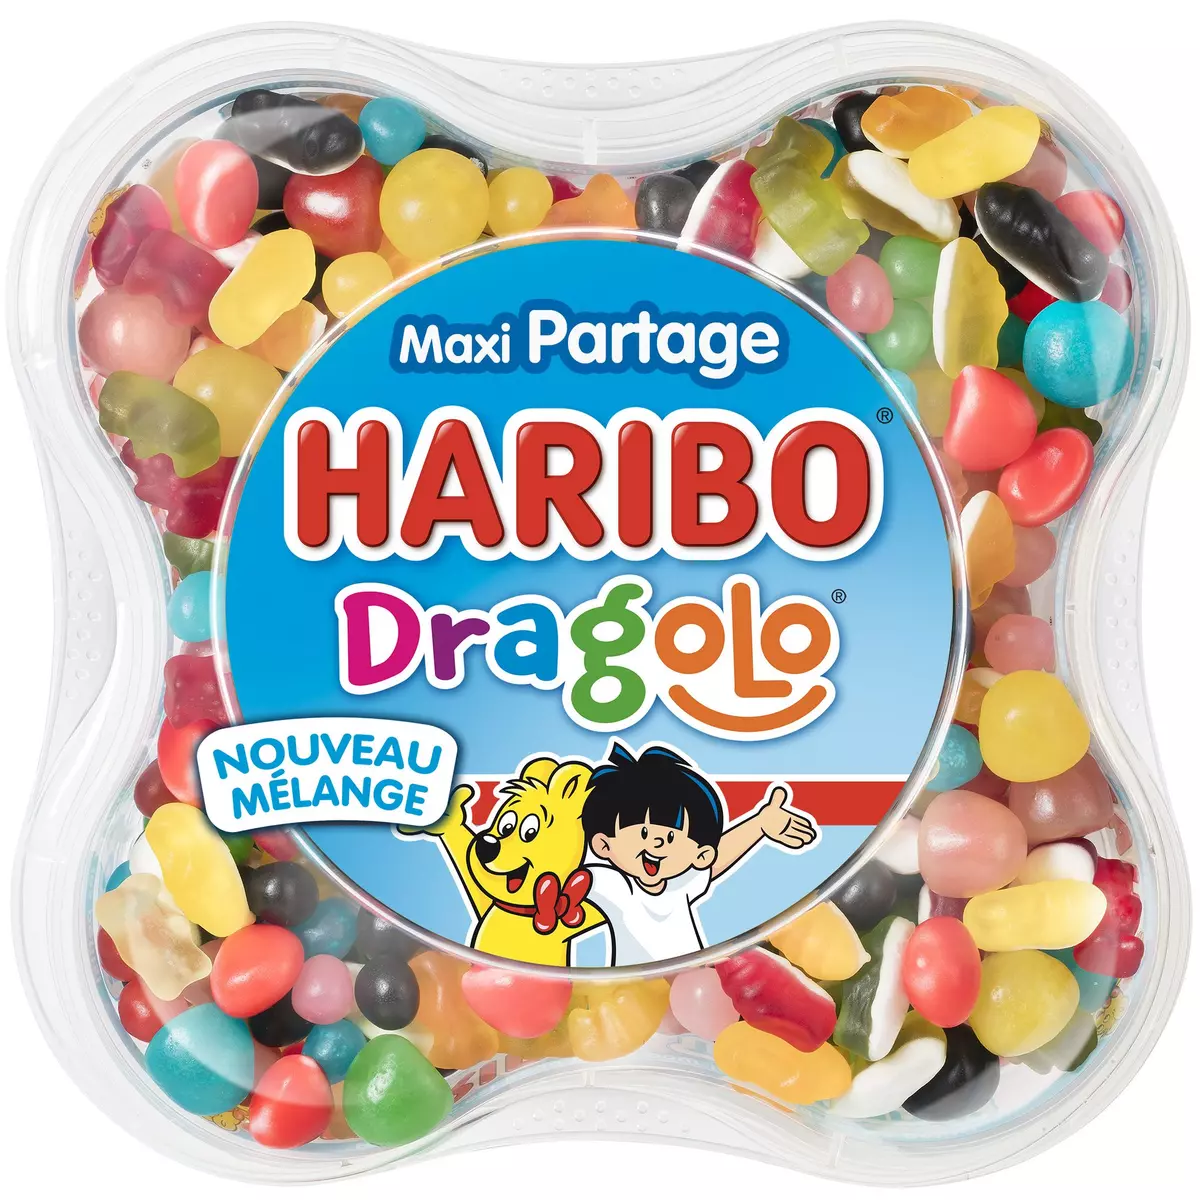 HARIBO Dragolo Assortiment de bonbons gélifiés en boite 750g